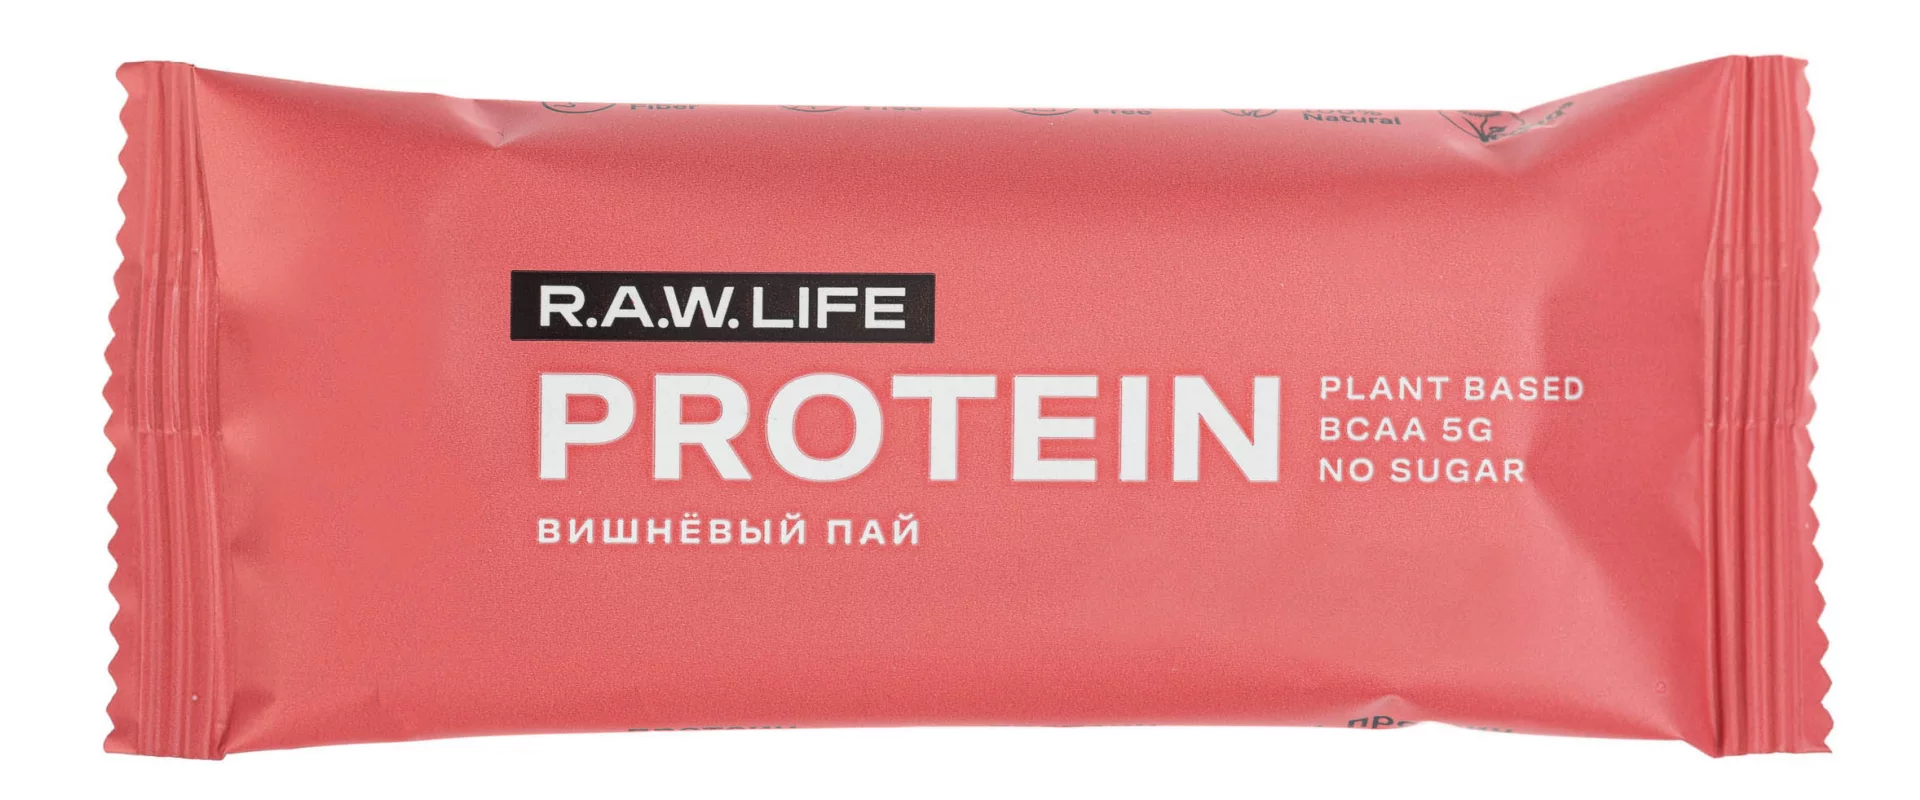 R.A.W. Life Protein Вишневый Пай 47g/ Протеиновый батончик